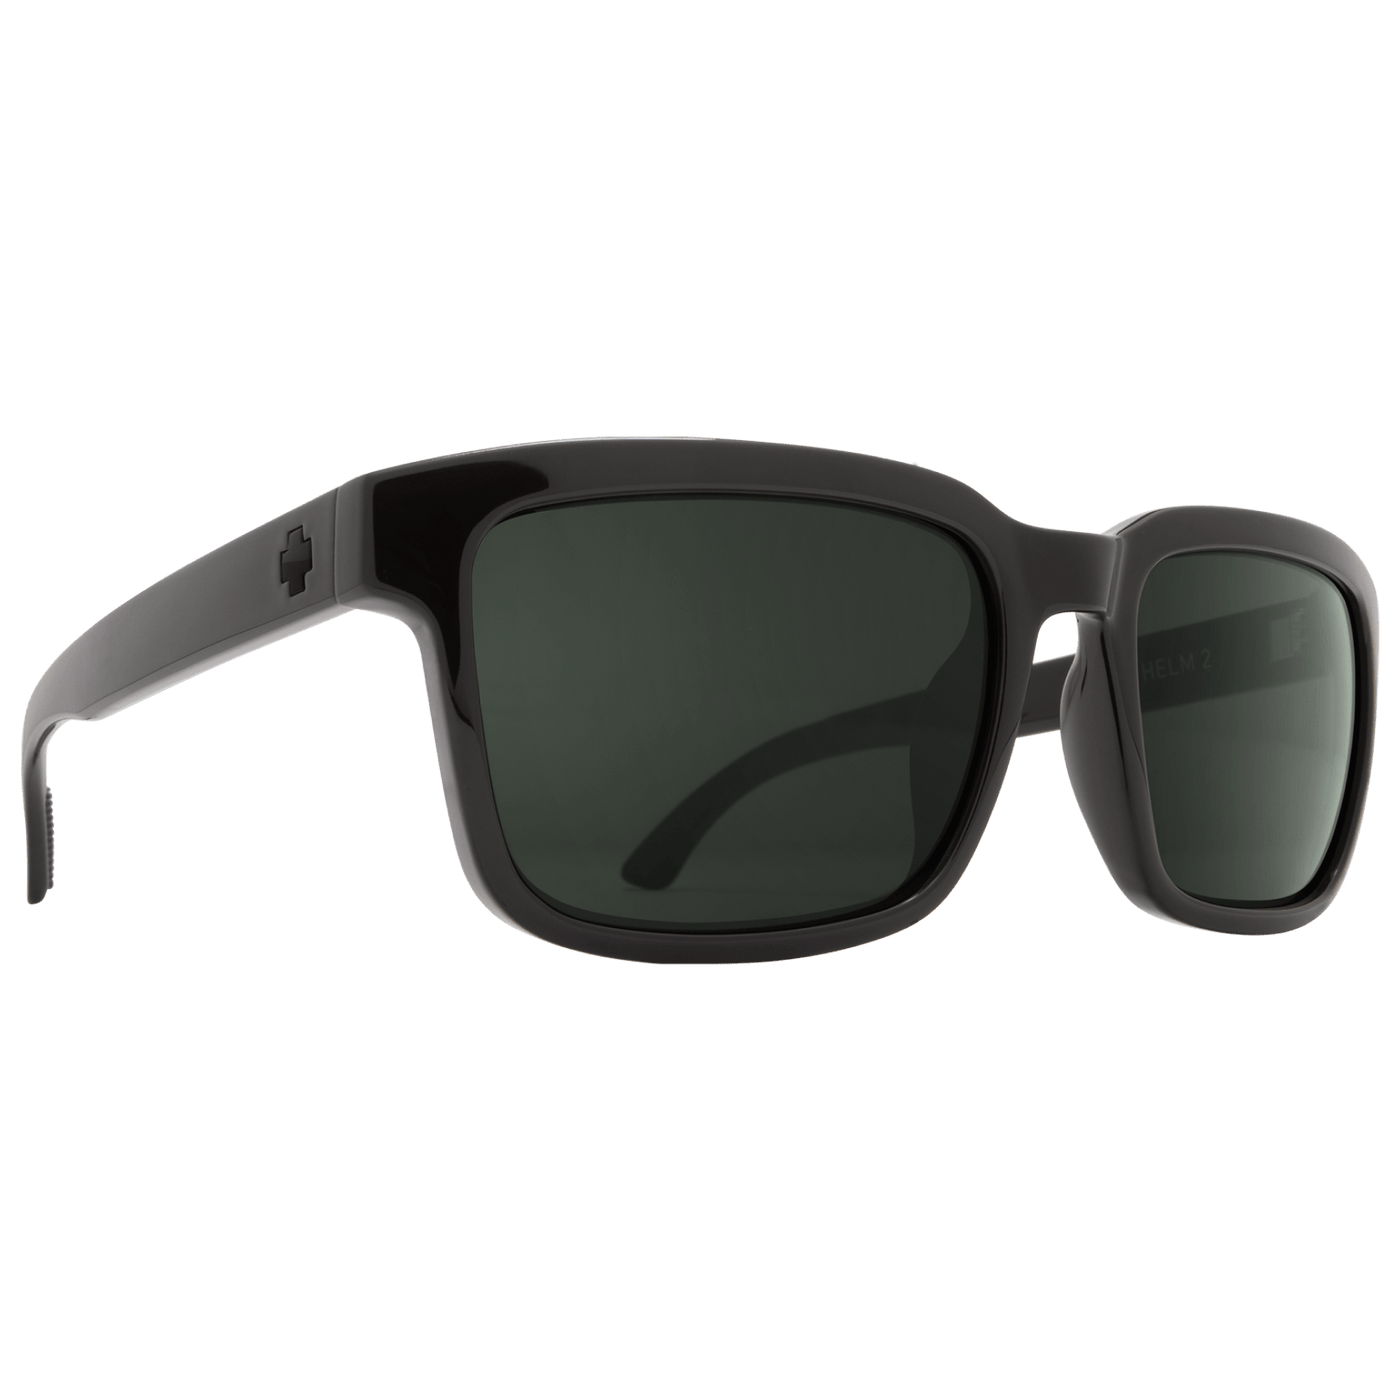 SPY HELM 2 Polarized Sunglasses - SOSI Gloss Black